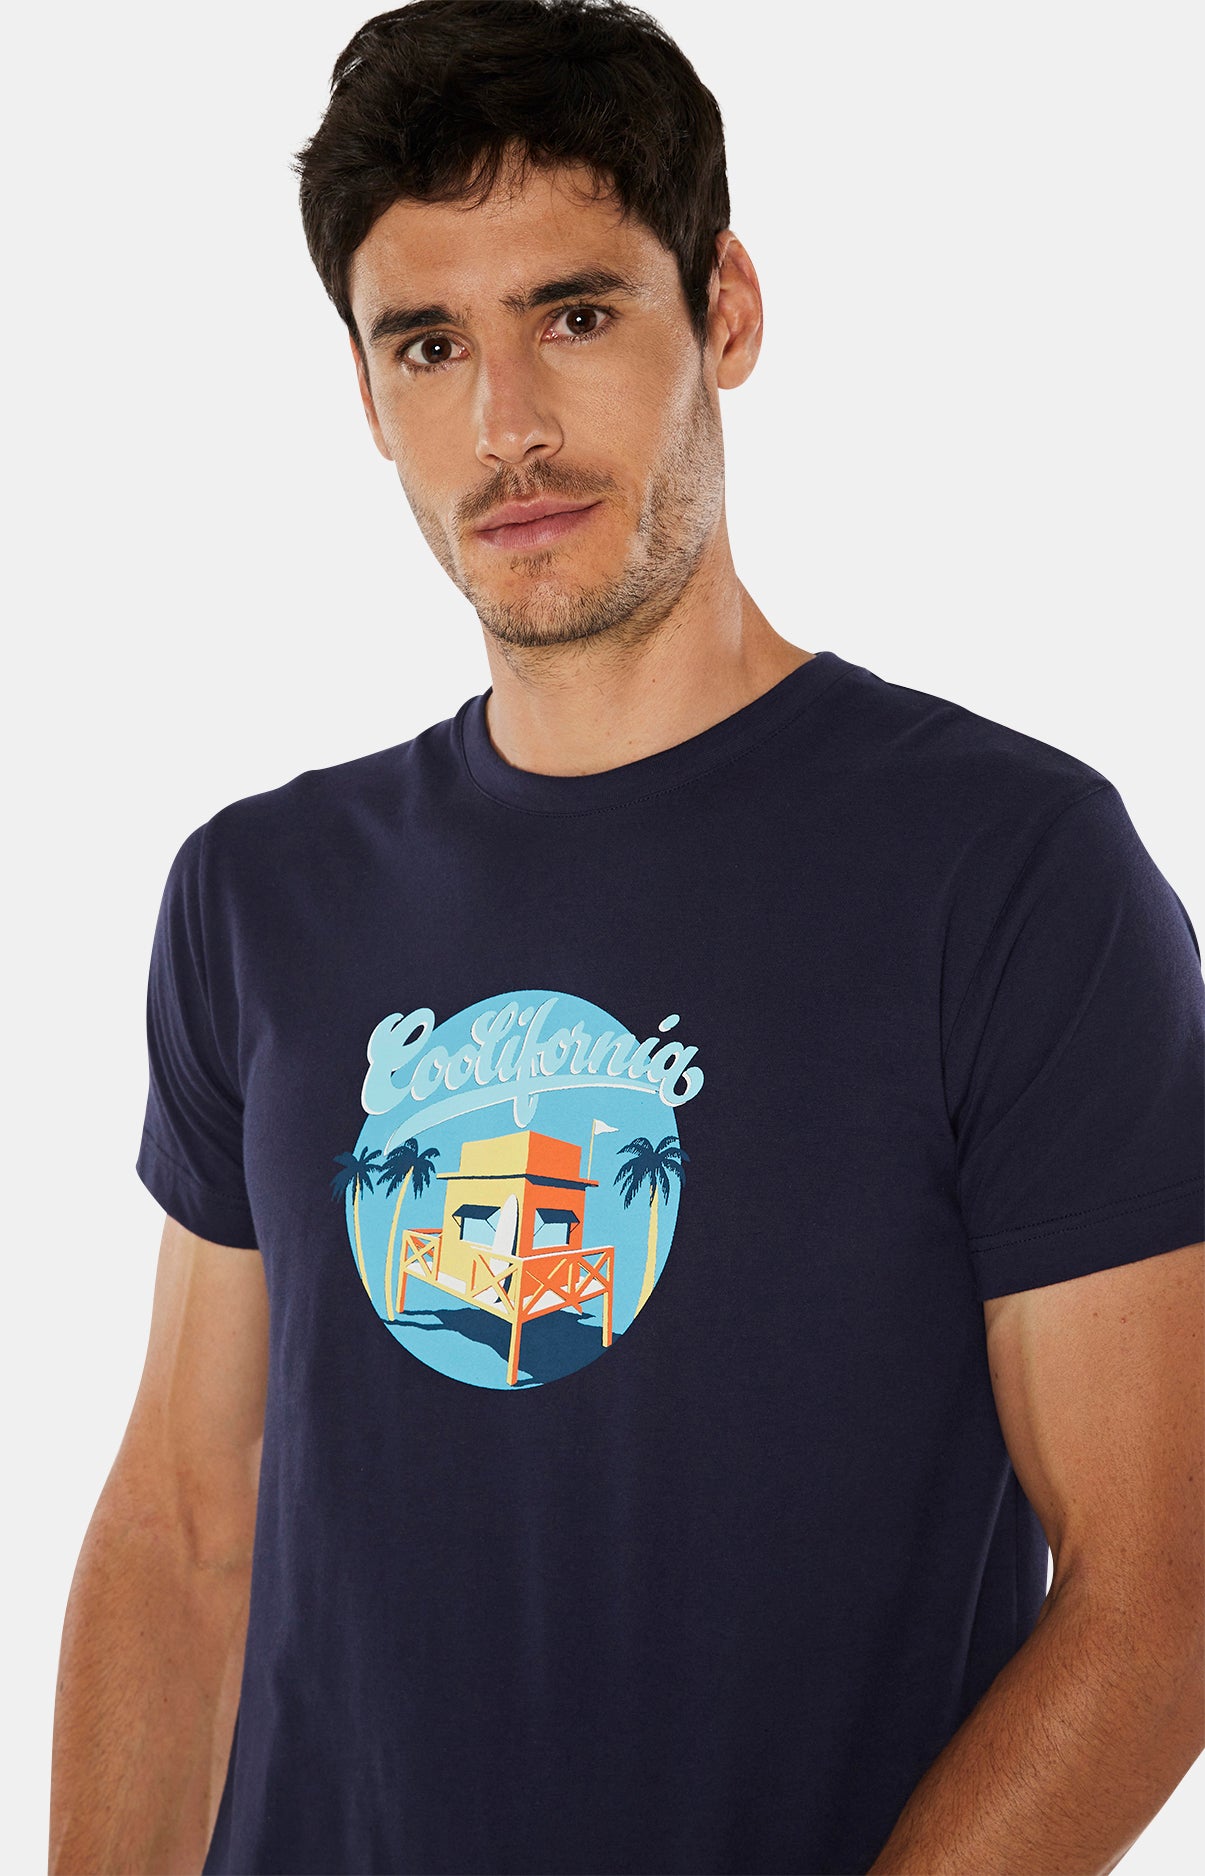 Tee-shirt Coolifornia 1